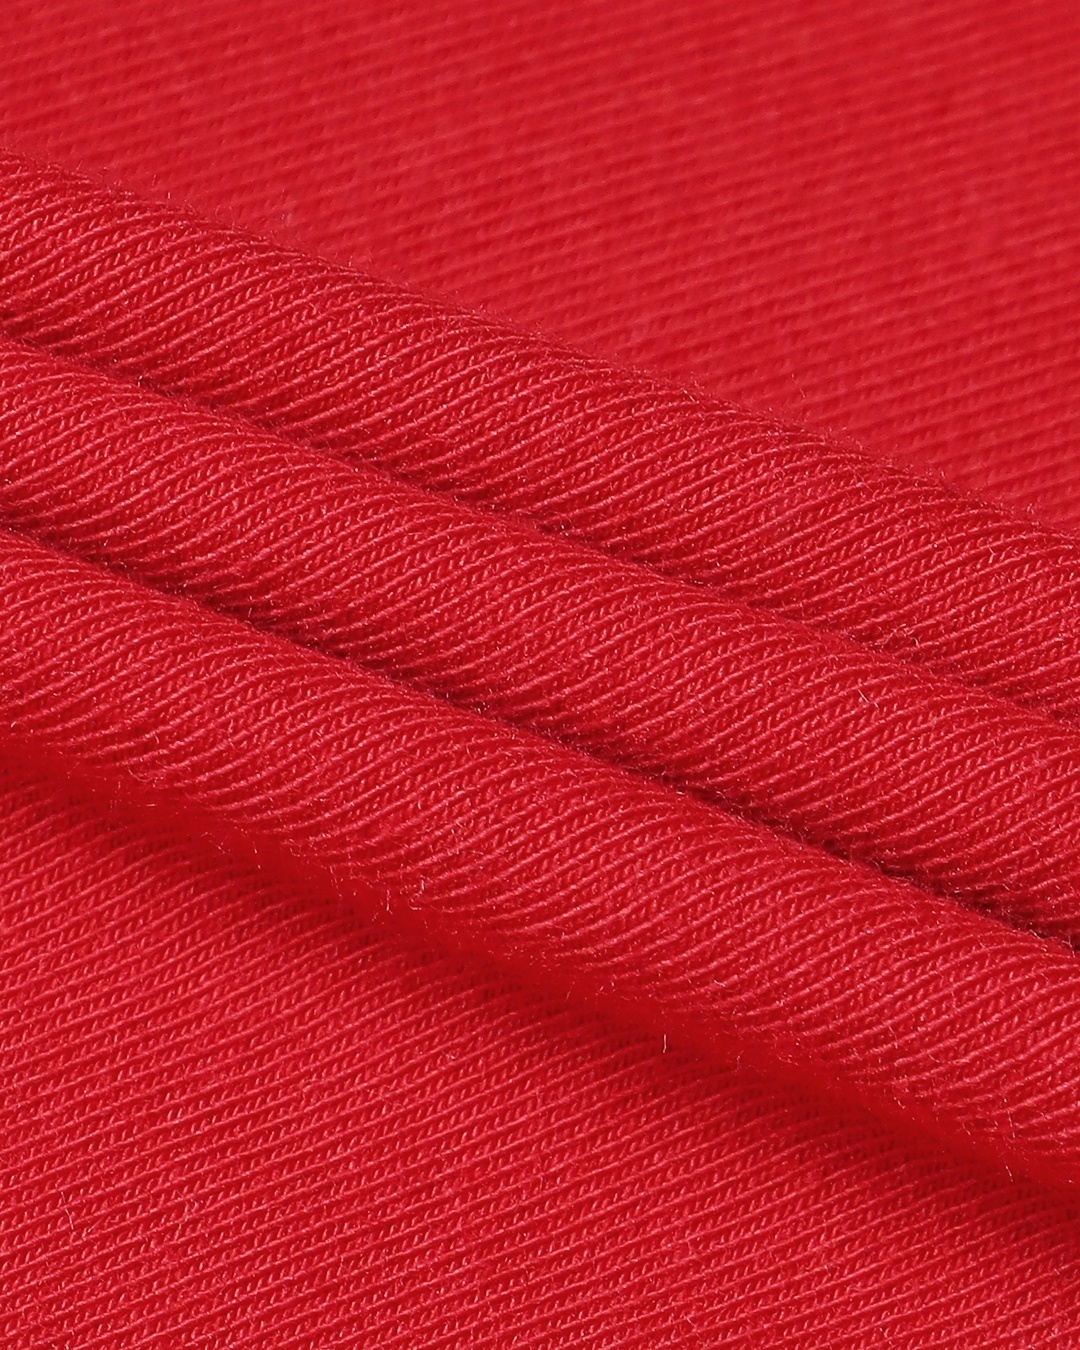 Shop Women's Red Elbow Sleeve Scoop Neck T-shirt